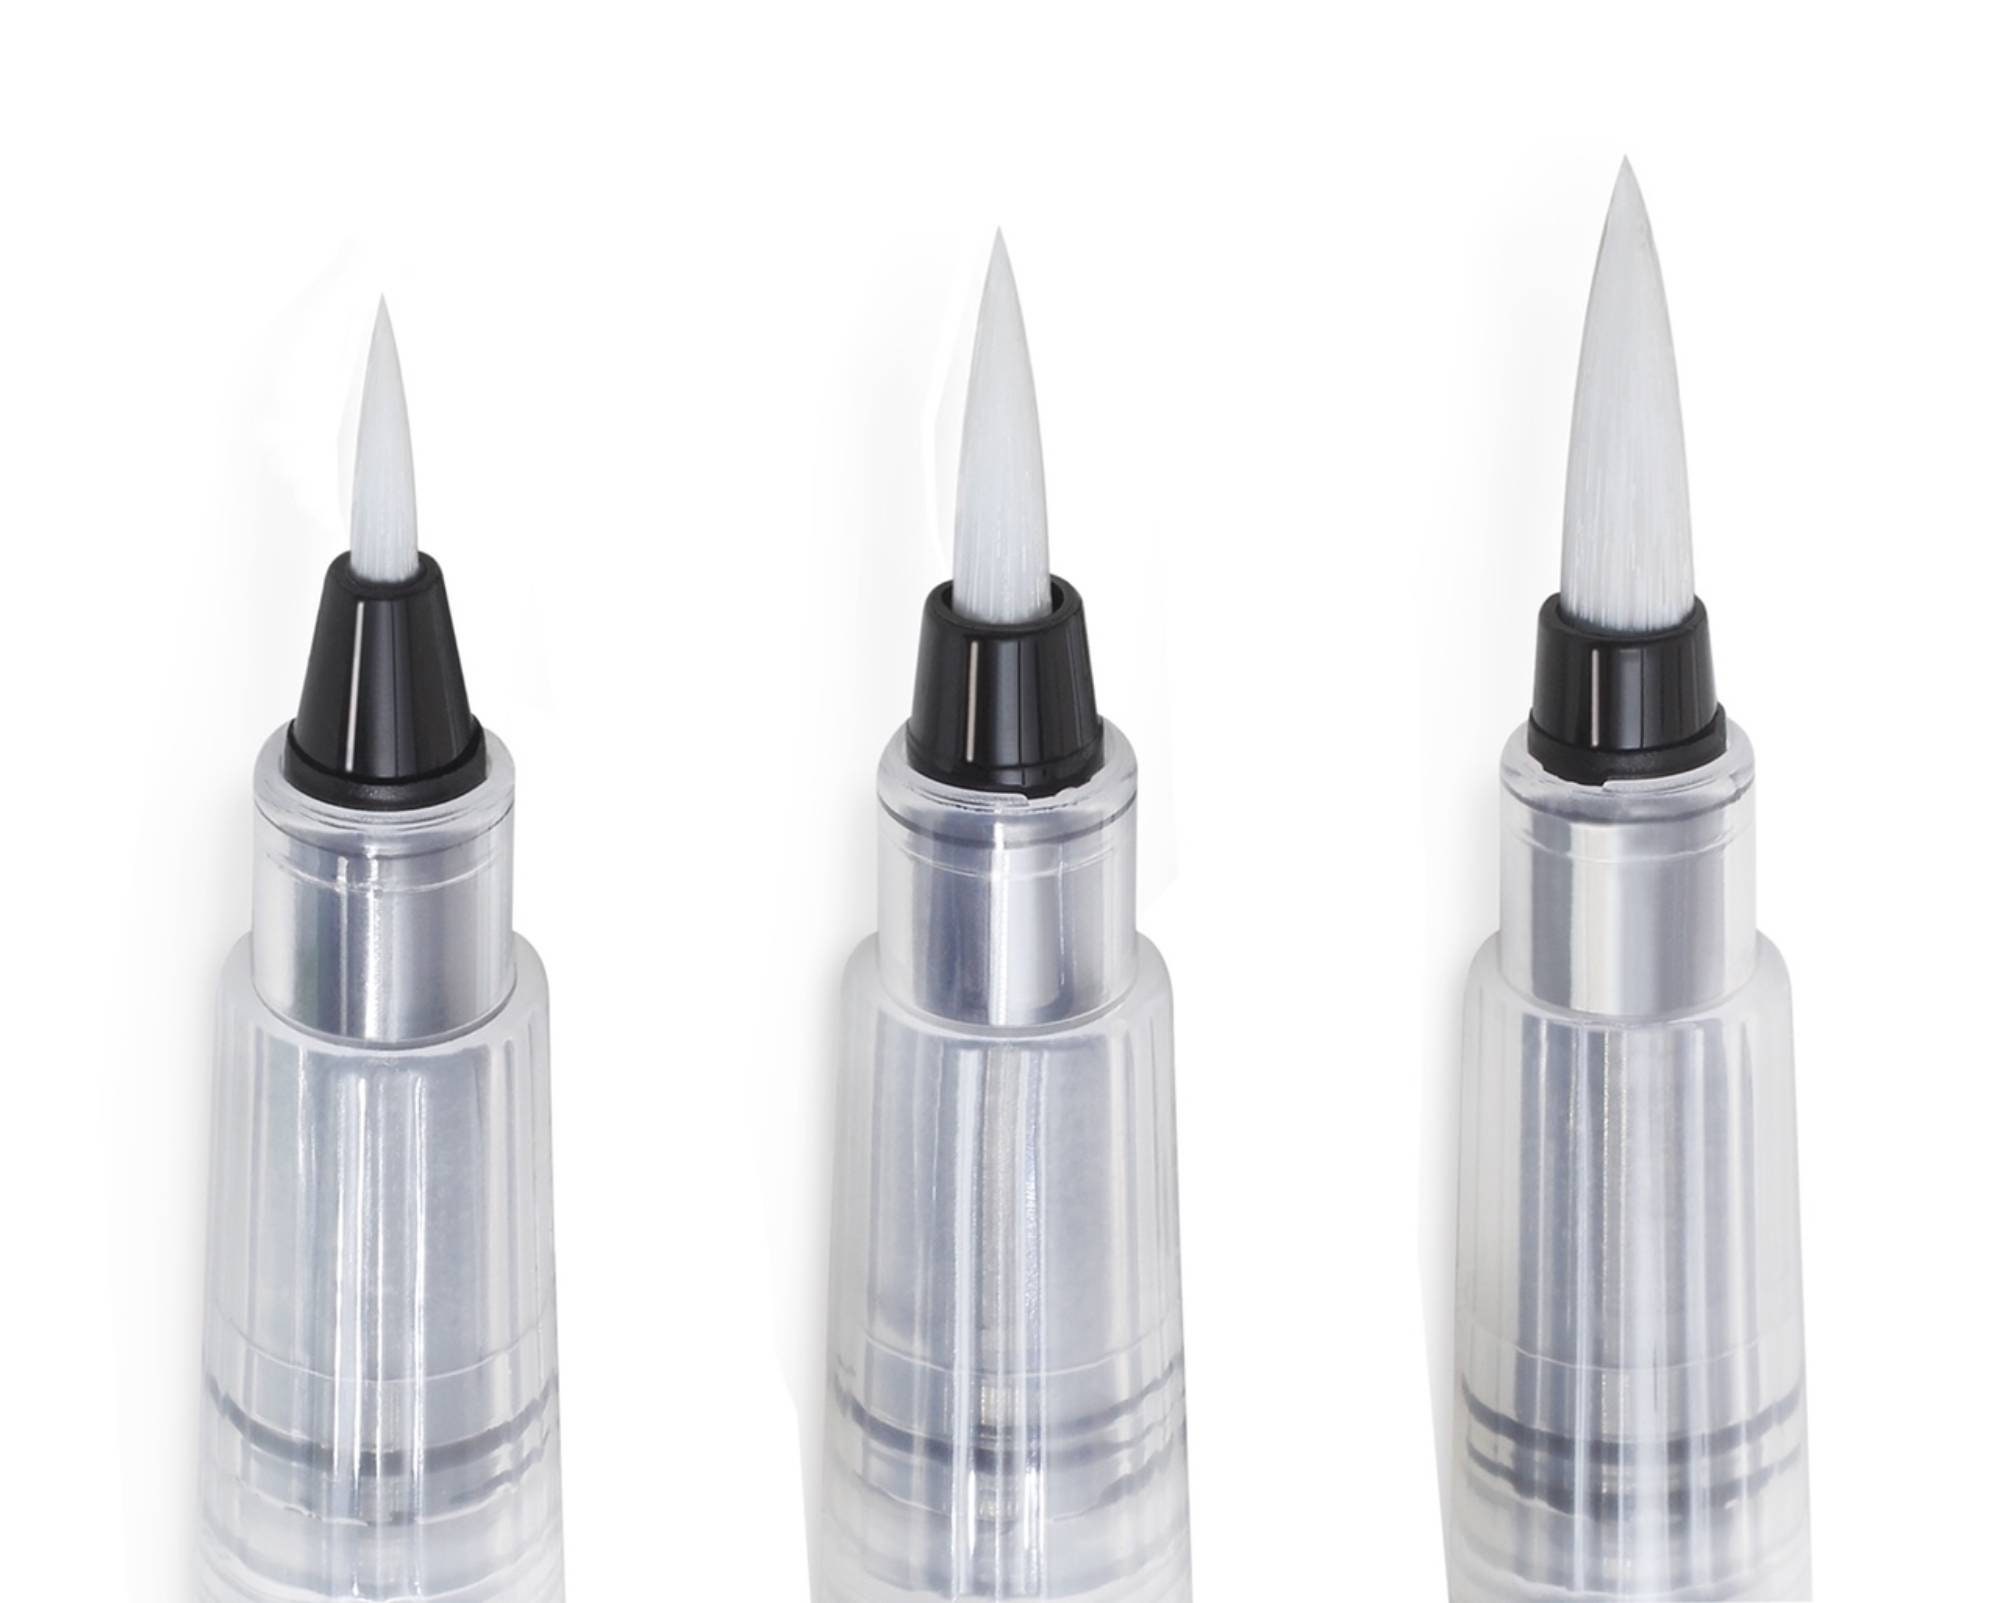 Liquidraw 3 X Water Brush Ink Pen Calligraphy Paint Pens for